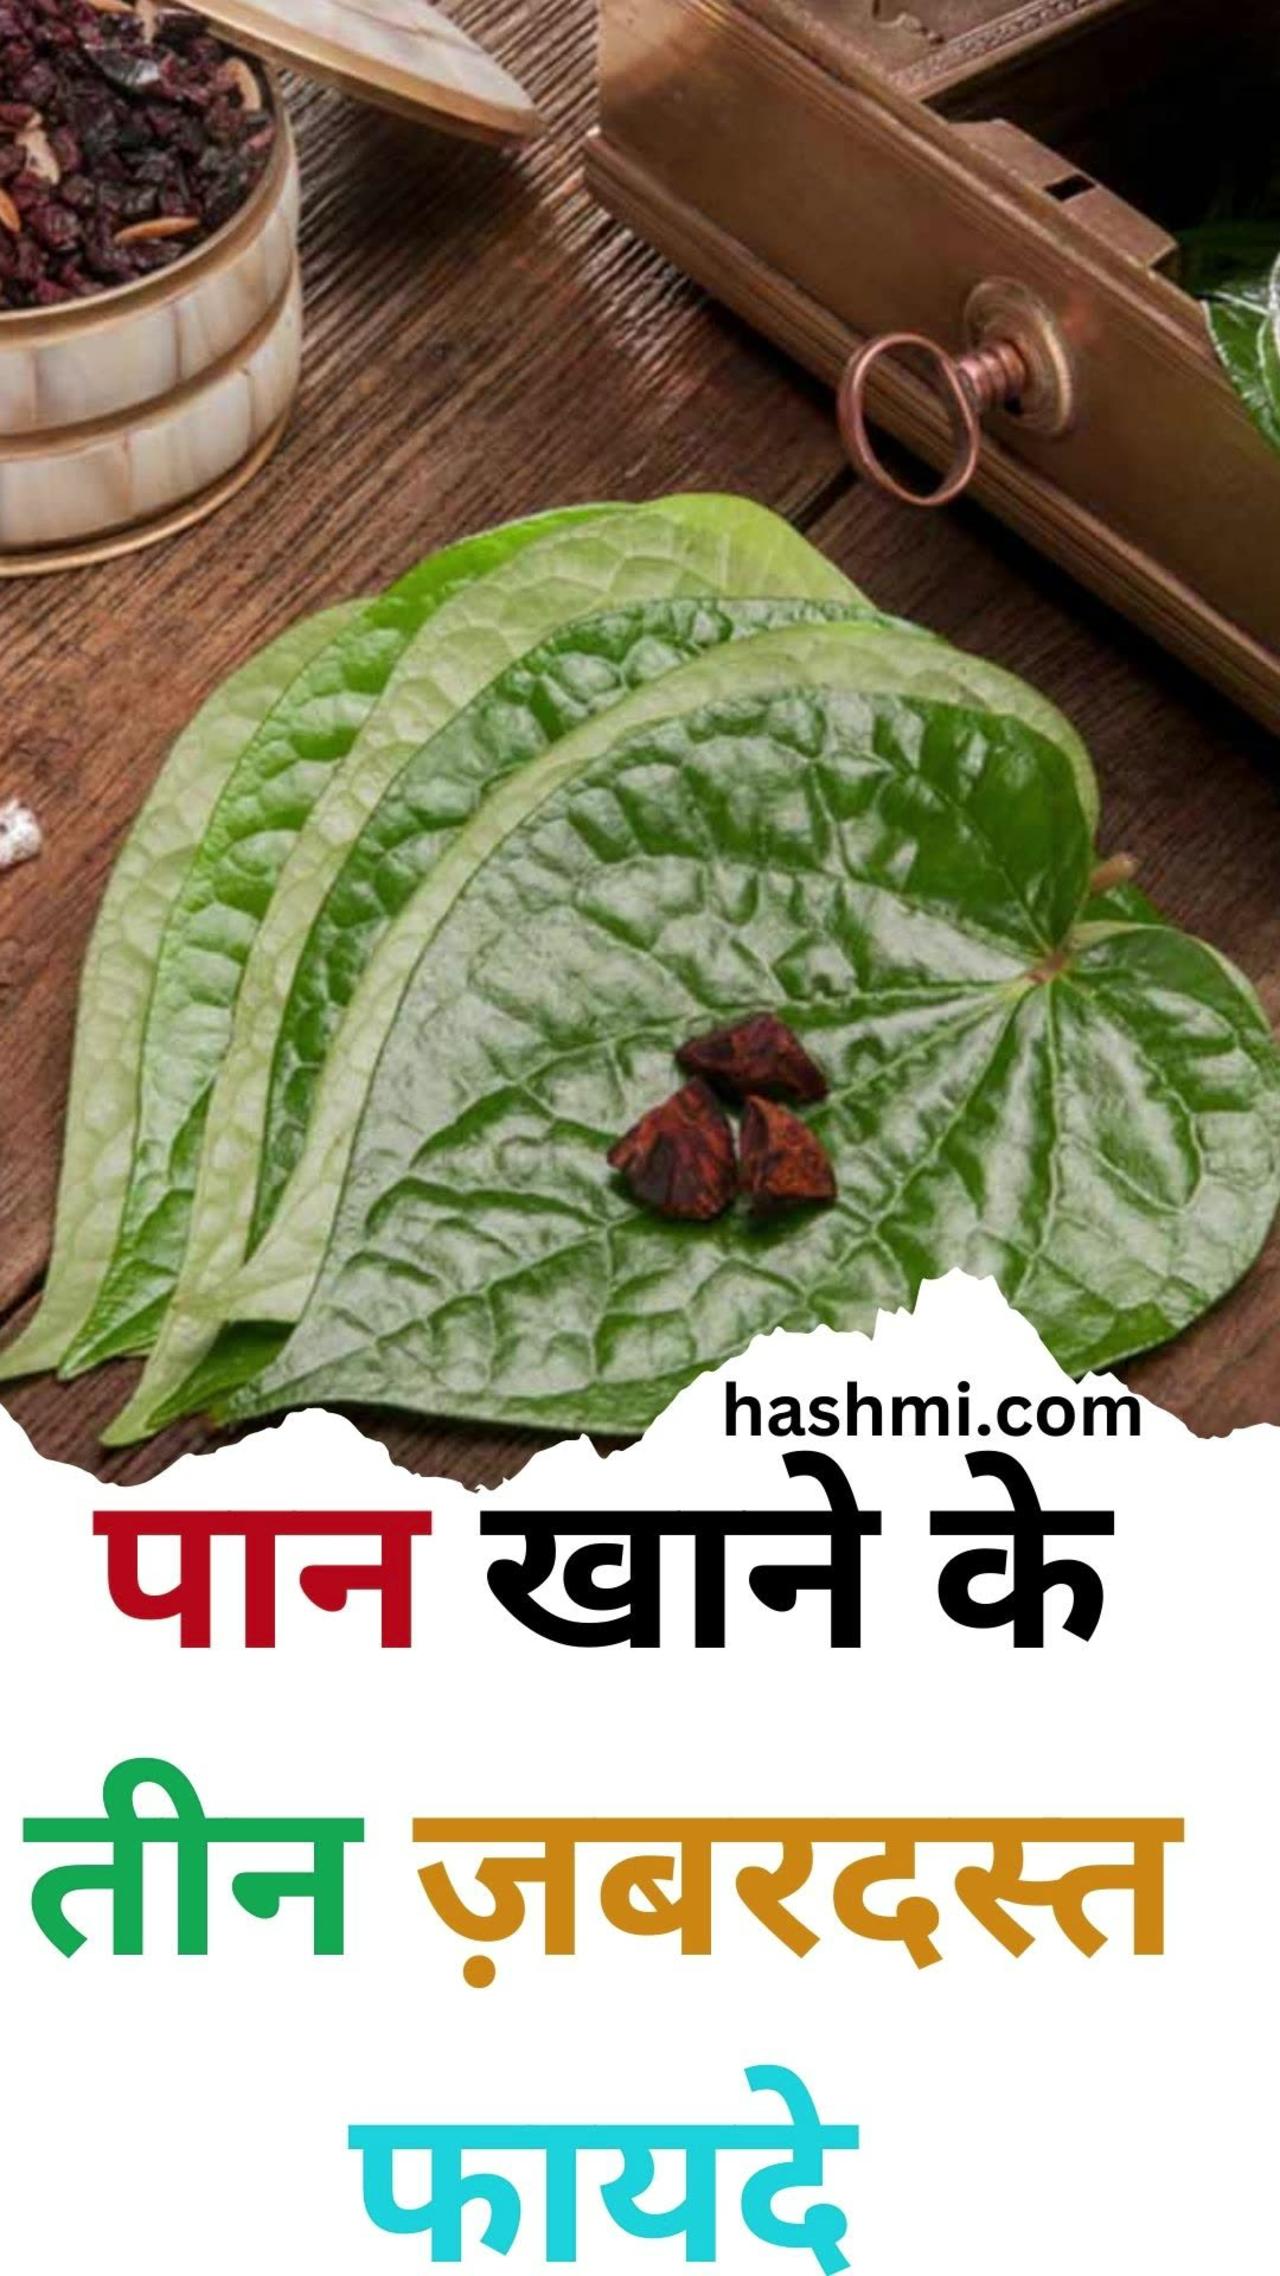 Three amazing benefits of eating betel leaves